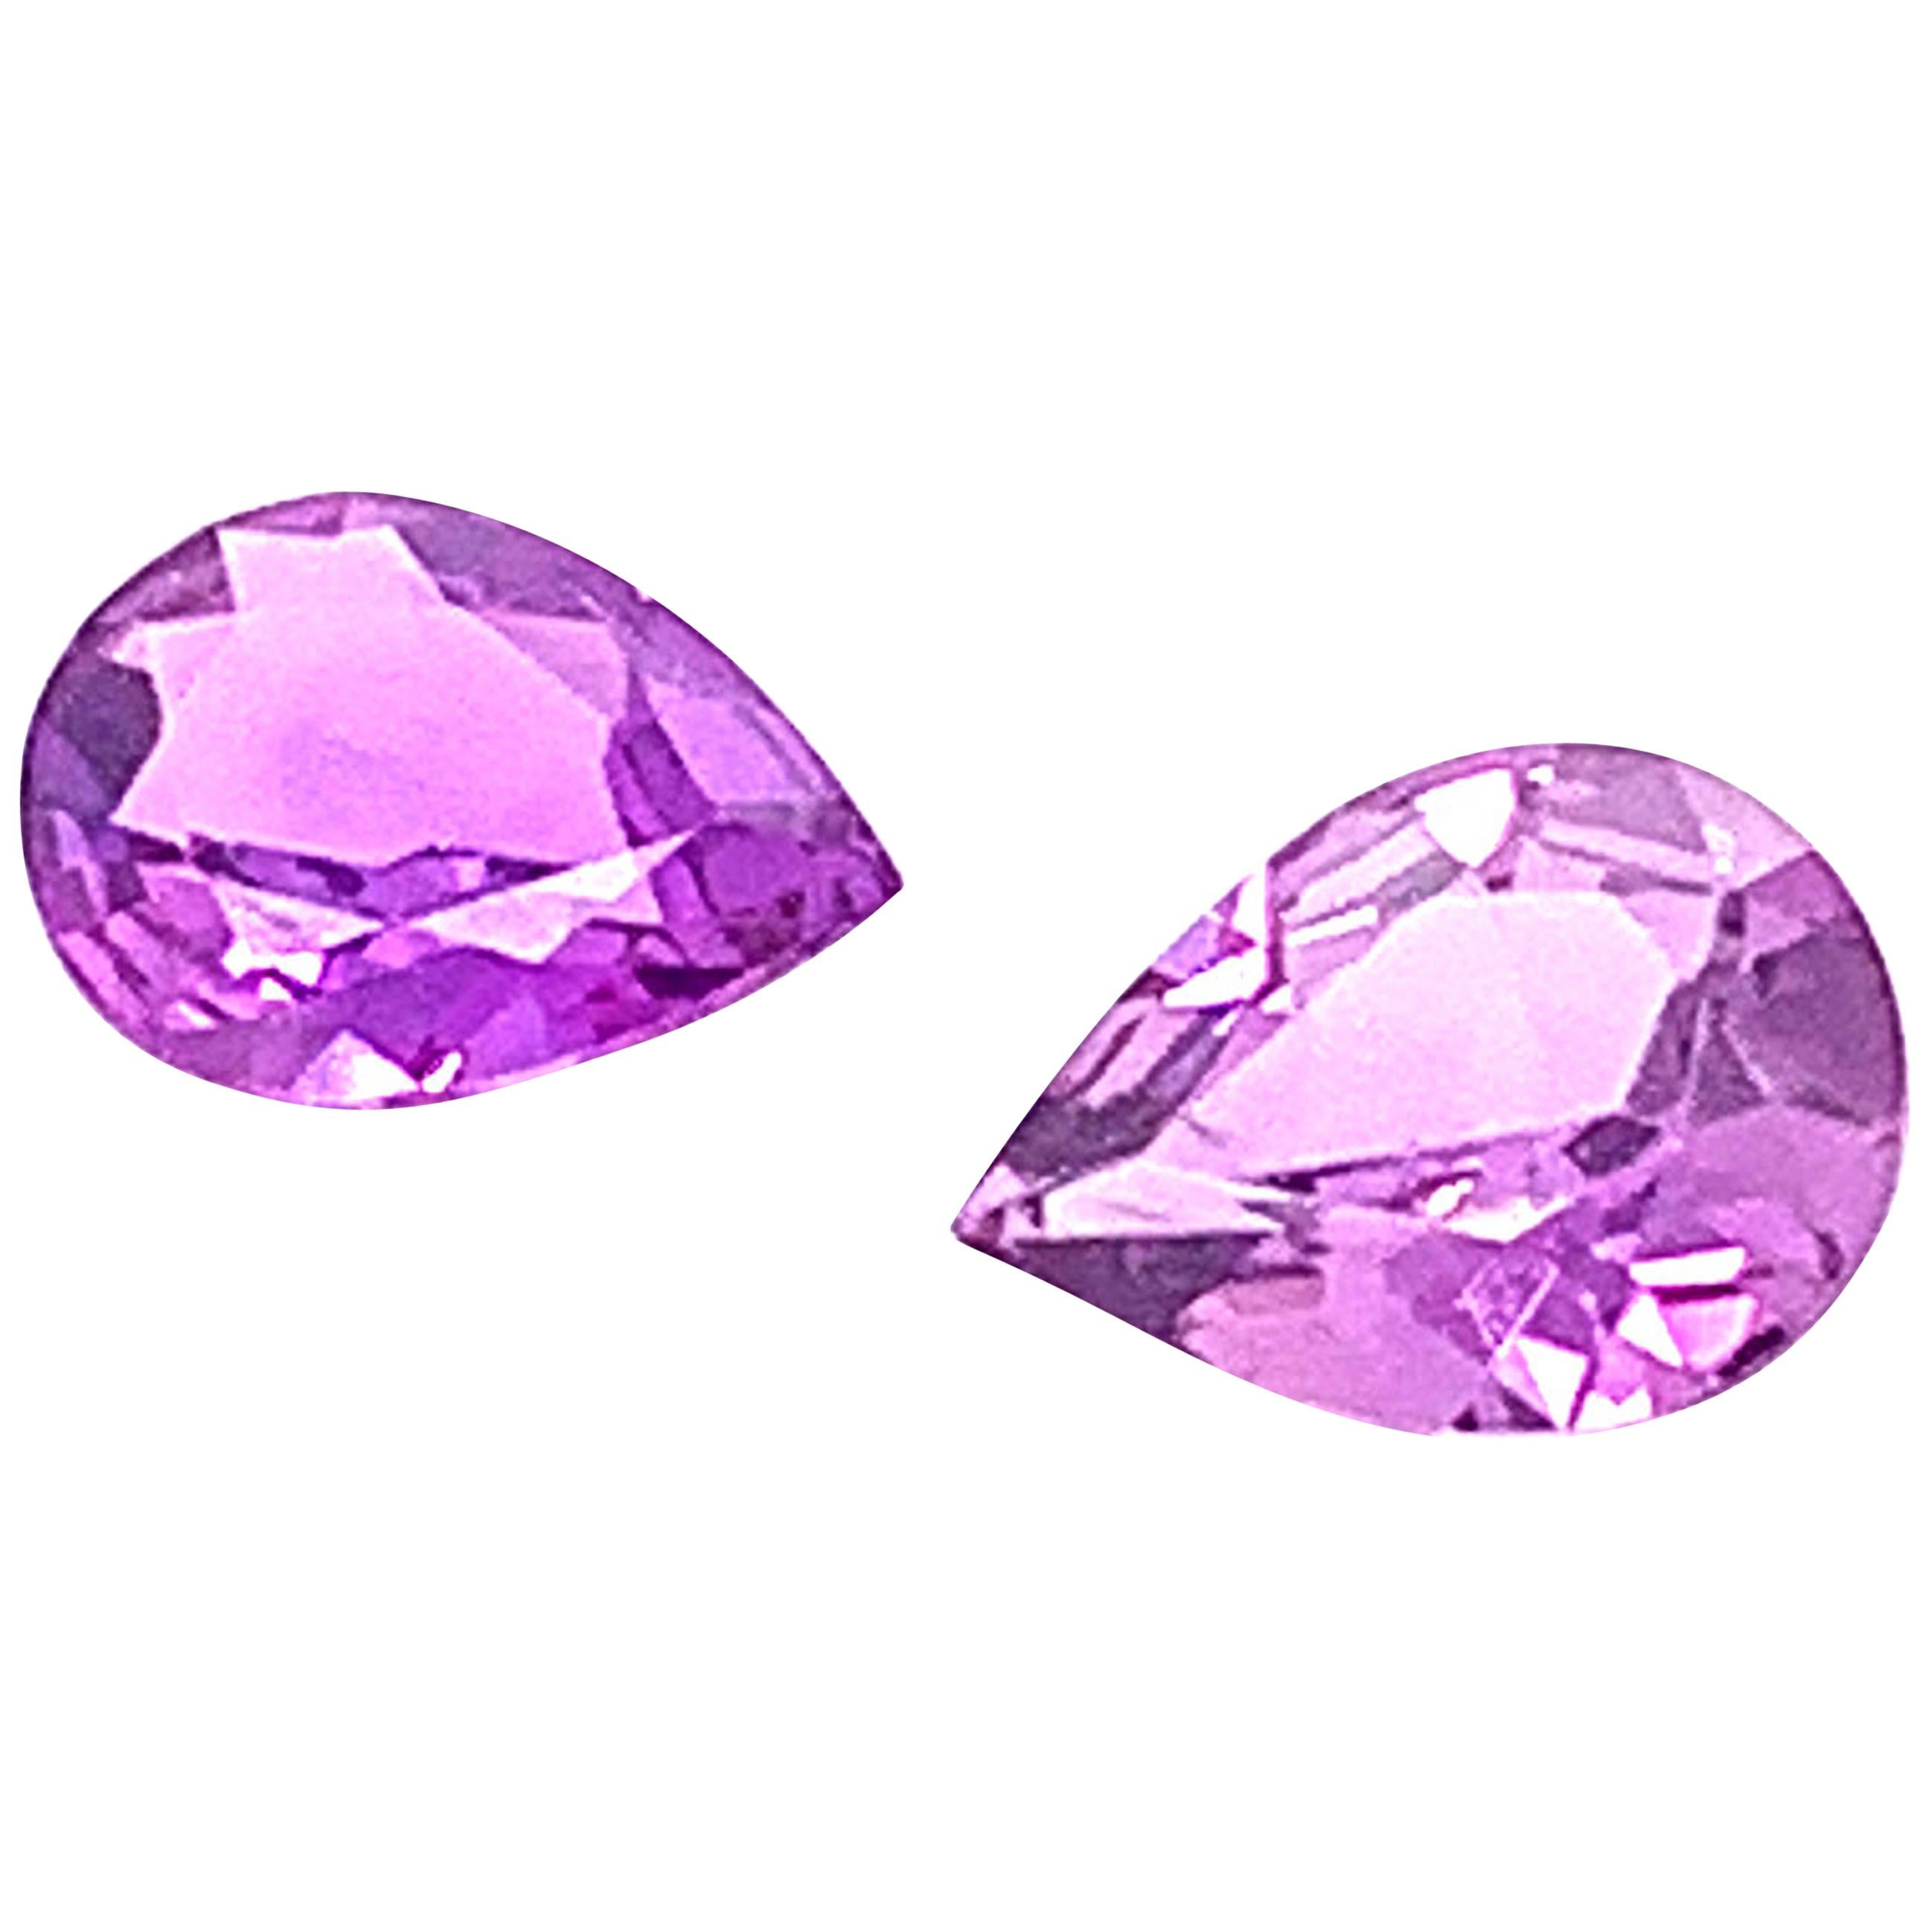 1.45 Carat Pear Shaped Purple Sapphire, Pair